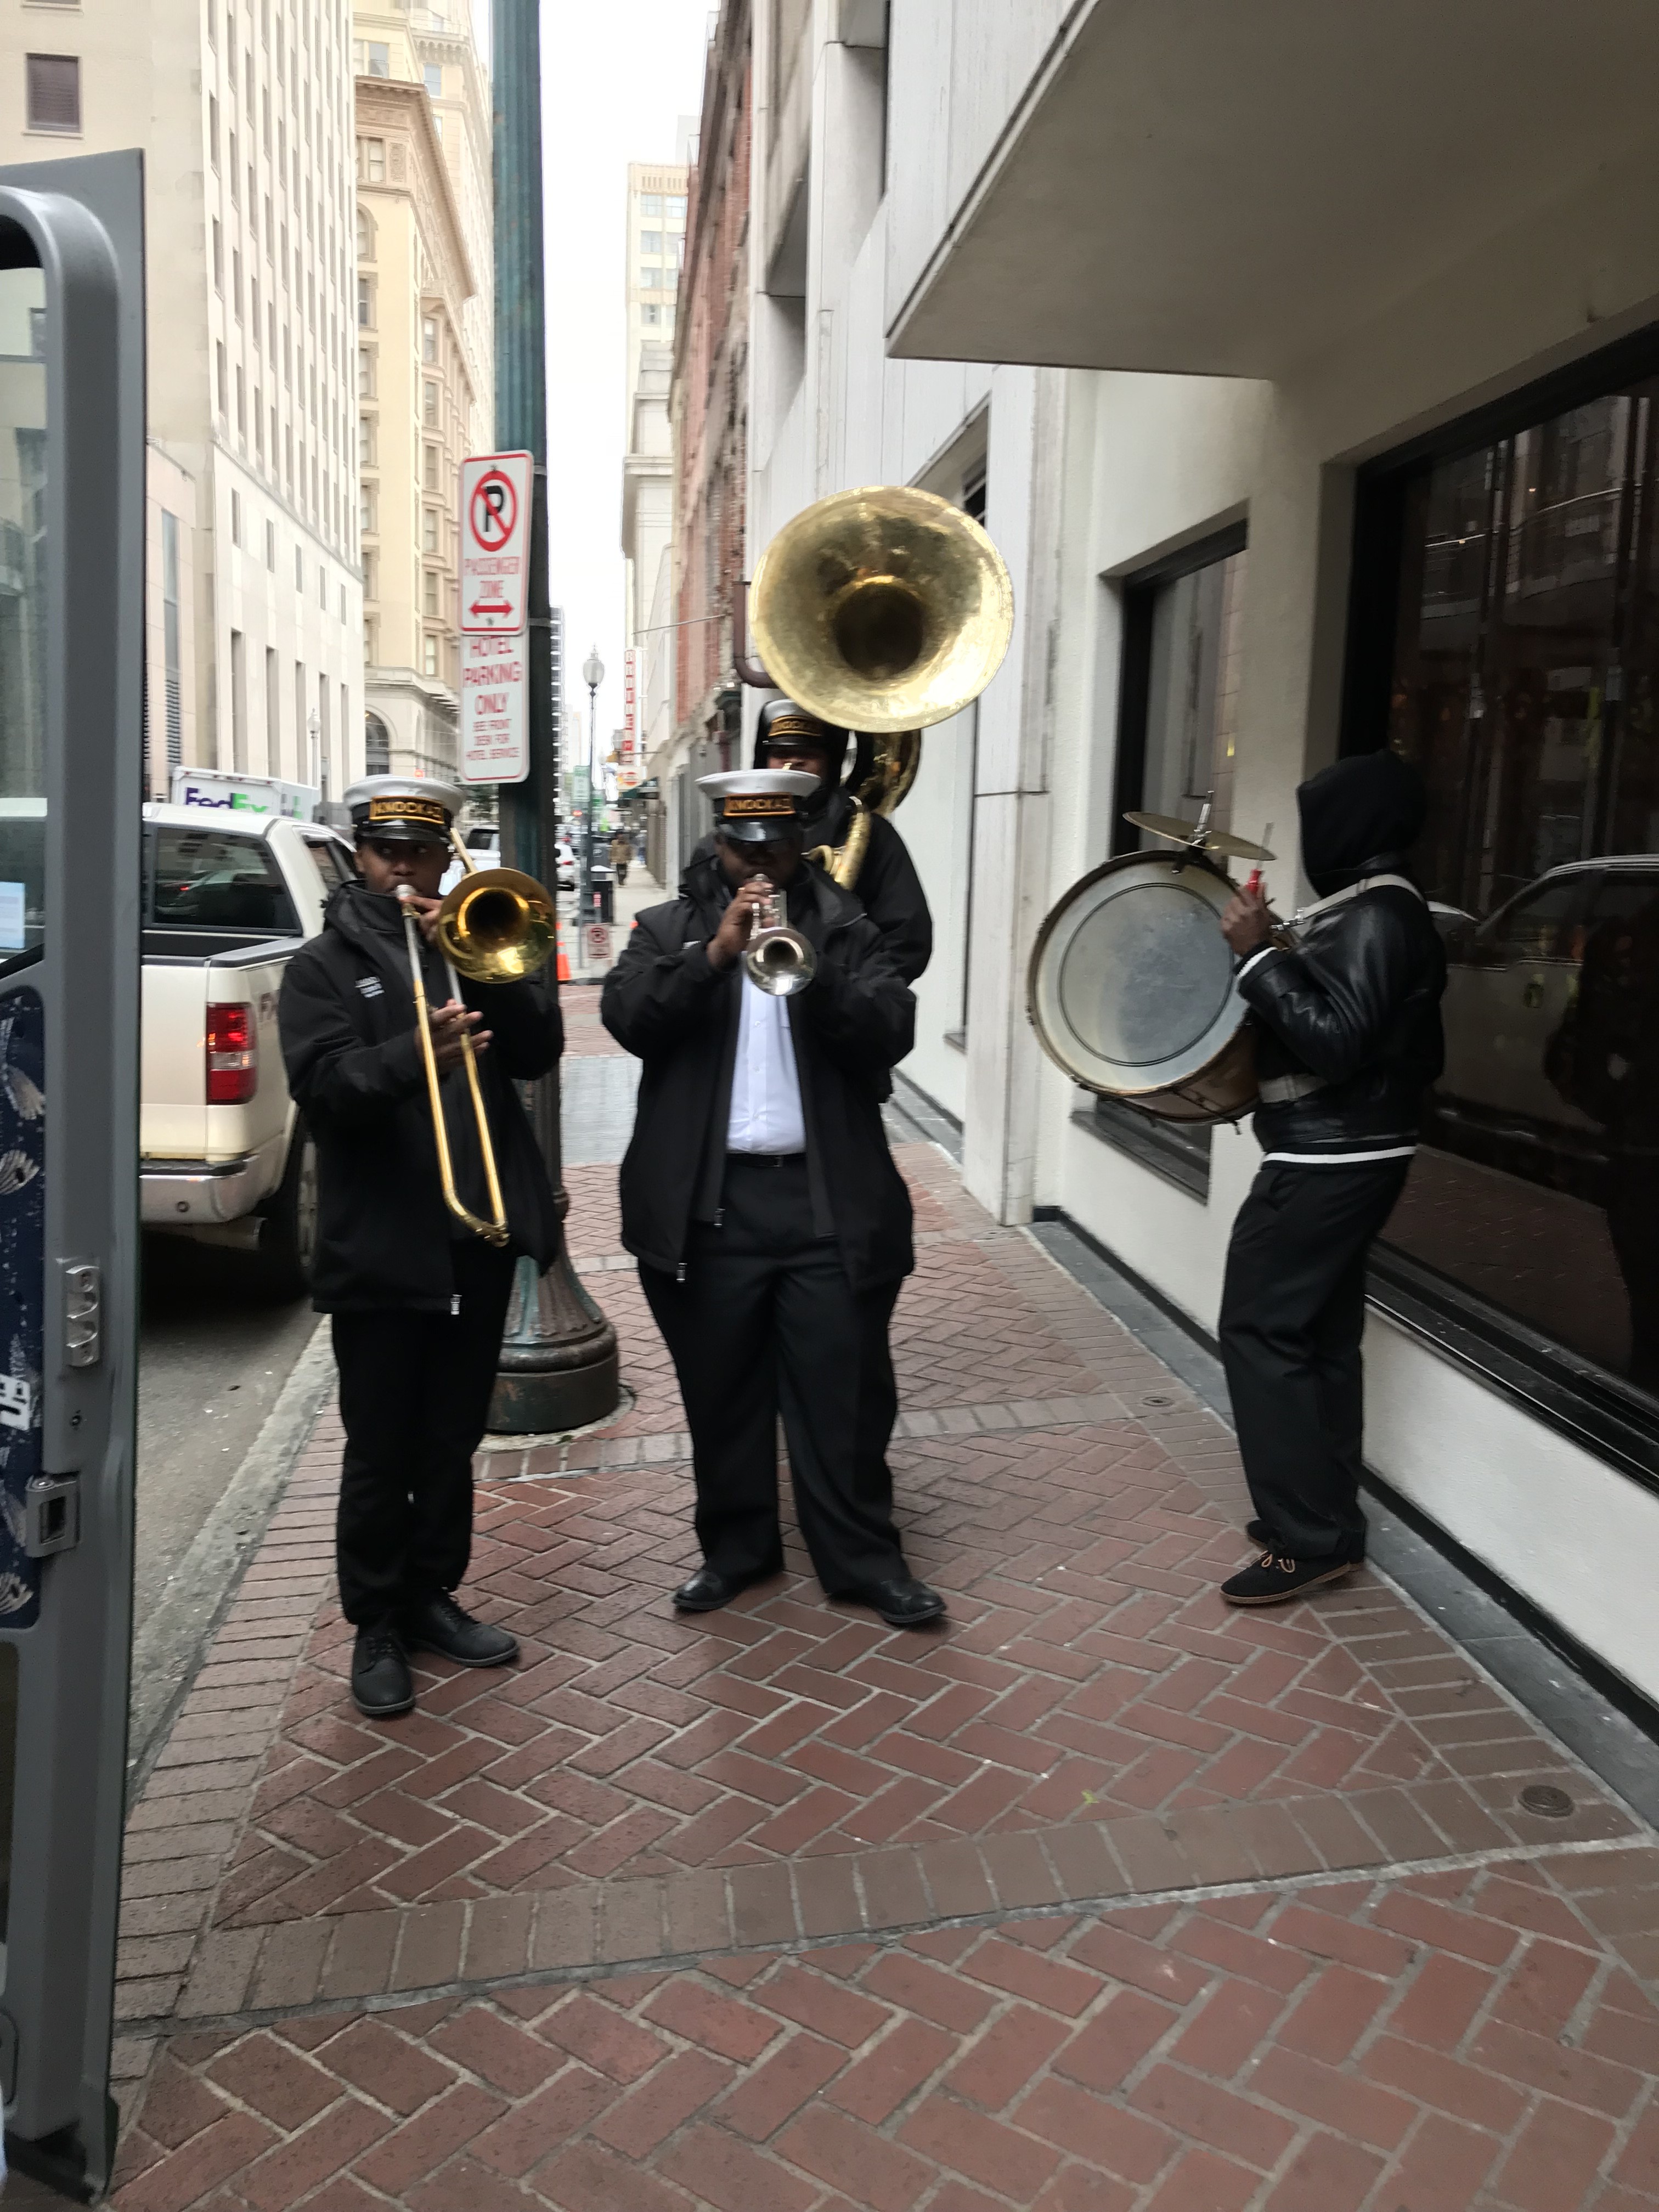 Knockaz Brass Band - Band - New Orleans, LA - WeddingWire